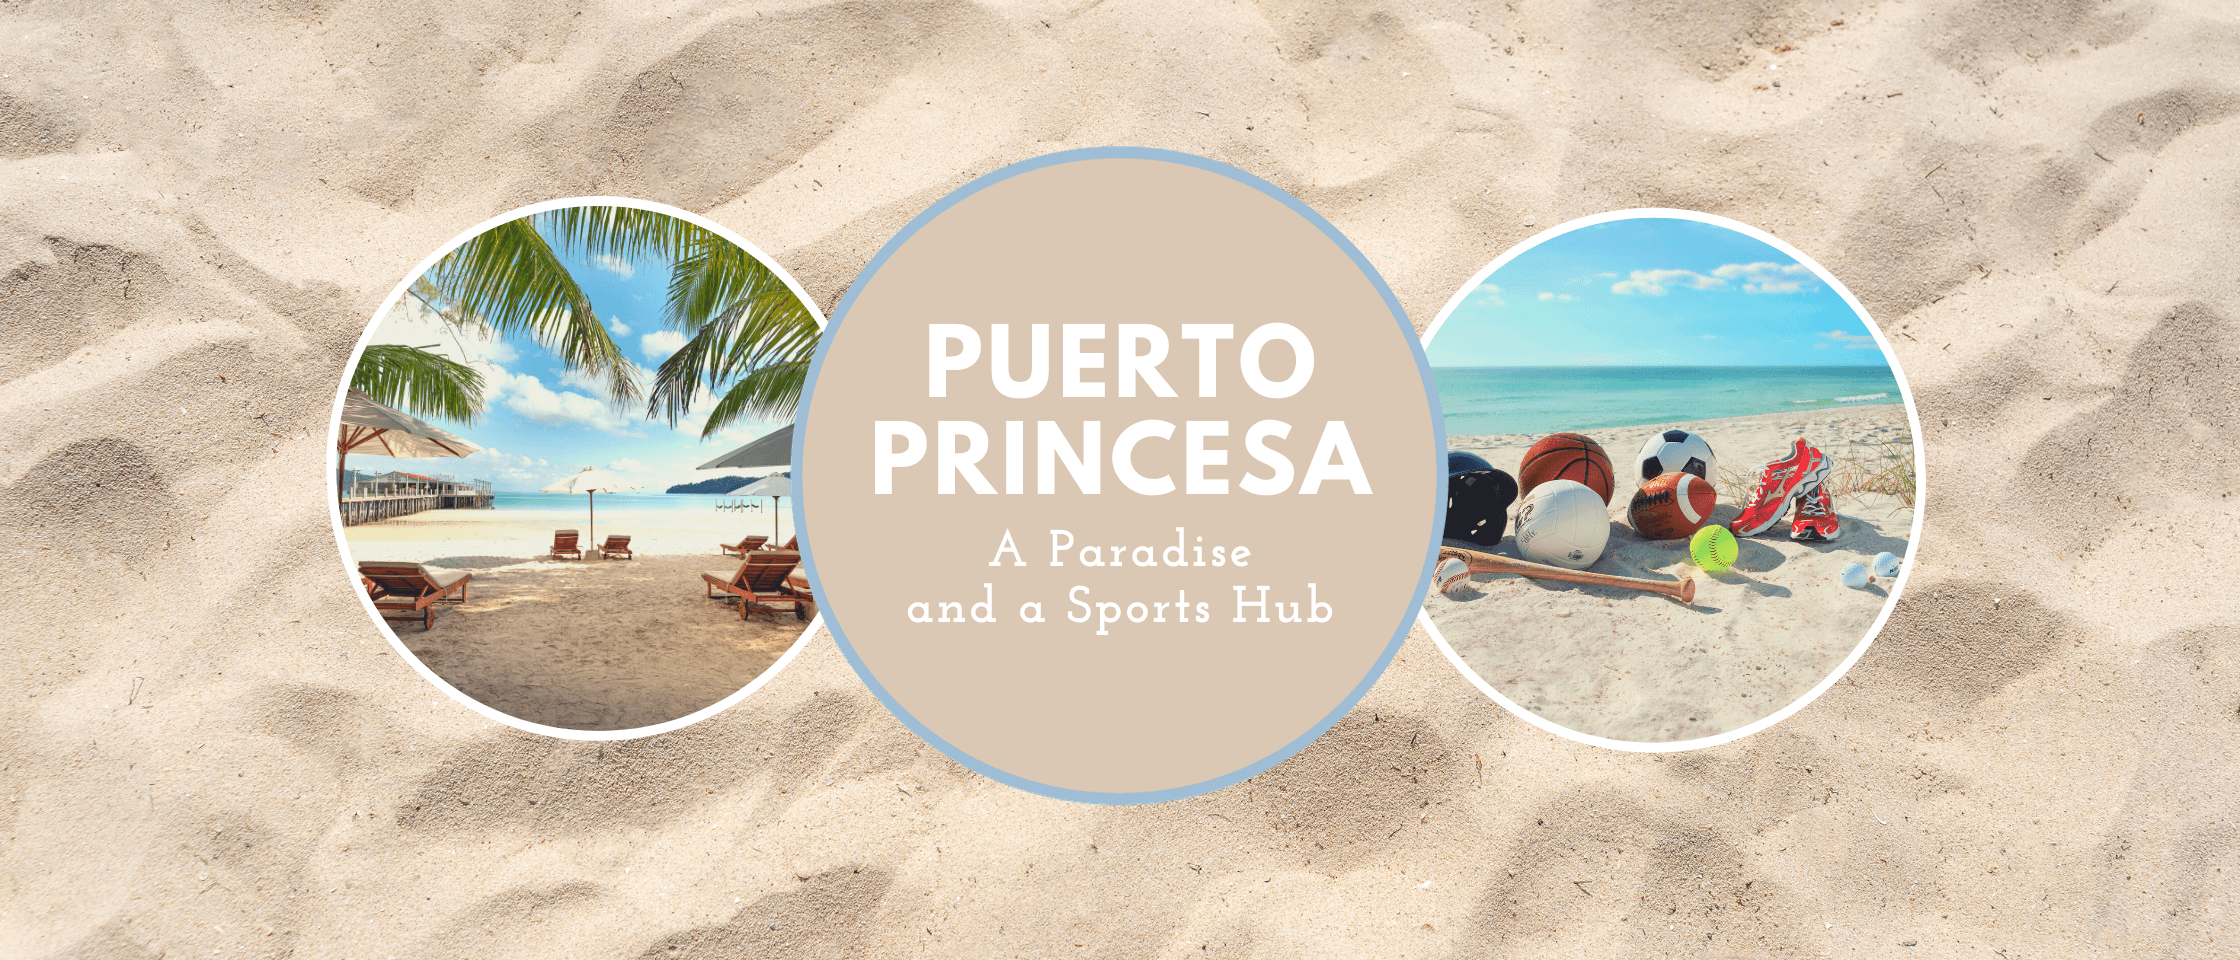 PUERTO PRINCESA: A Paradise and Sports Hub